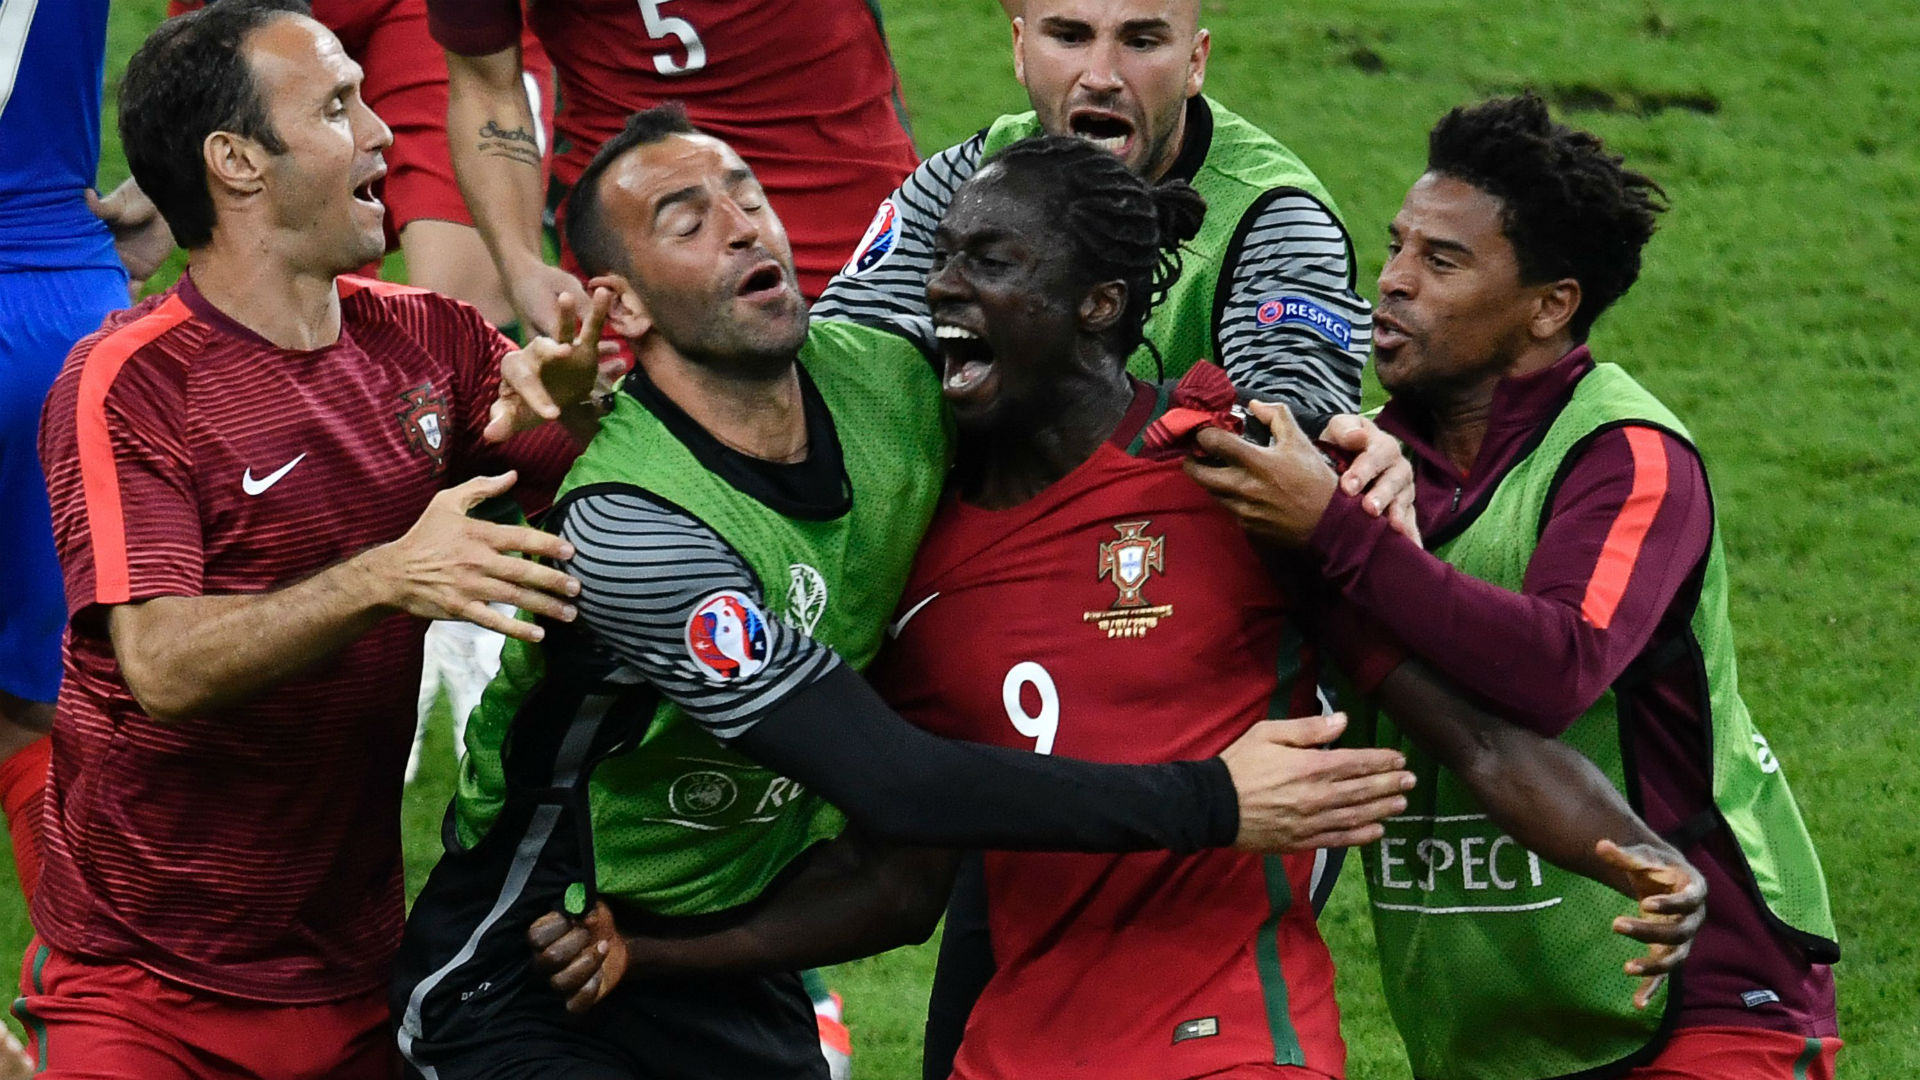 Portugal V France Match Report 10 07 16 European Championship Goal Com